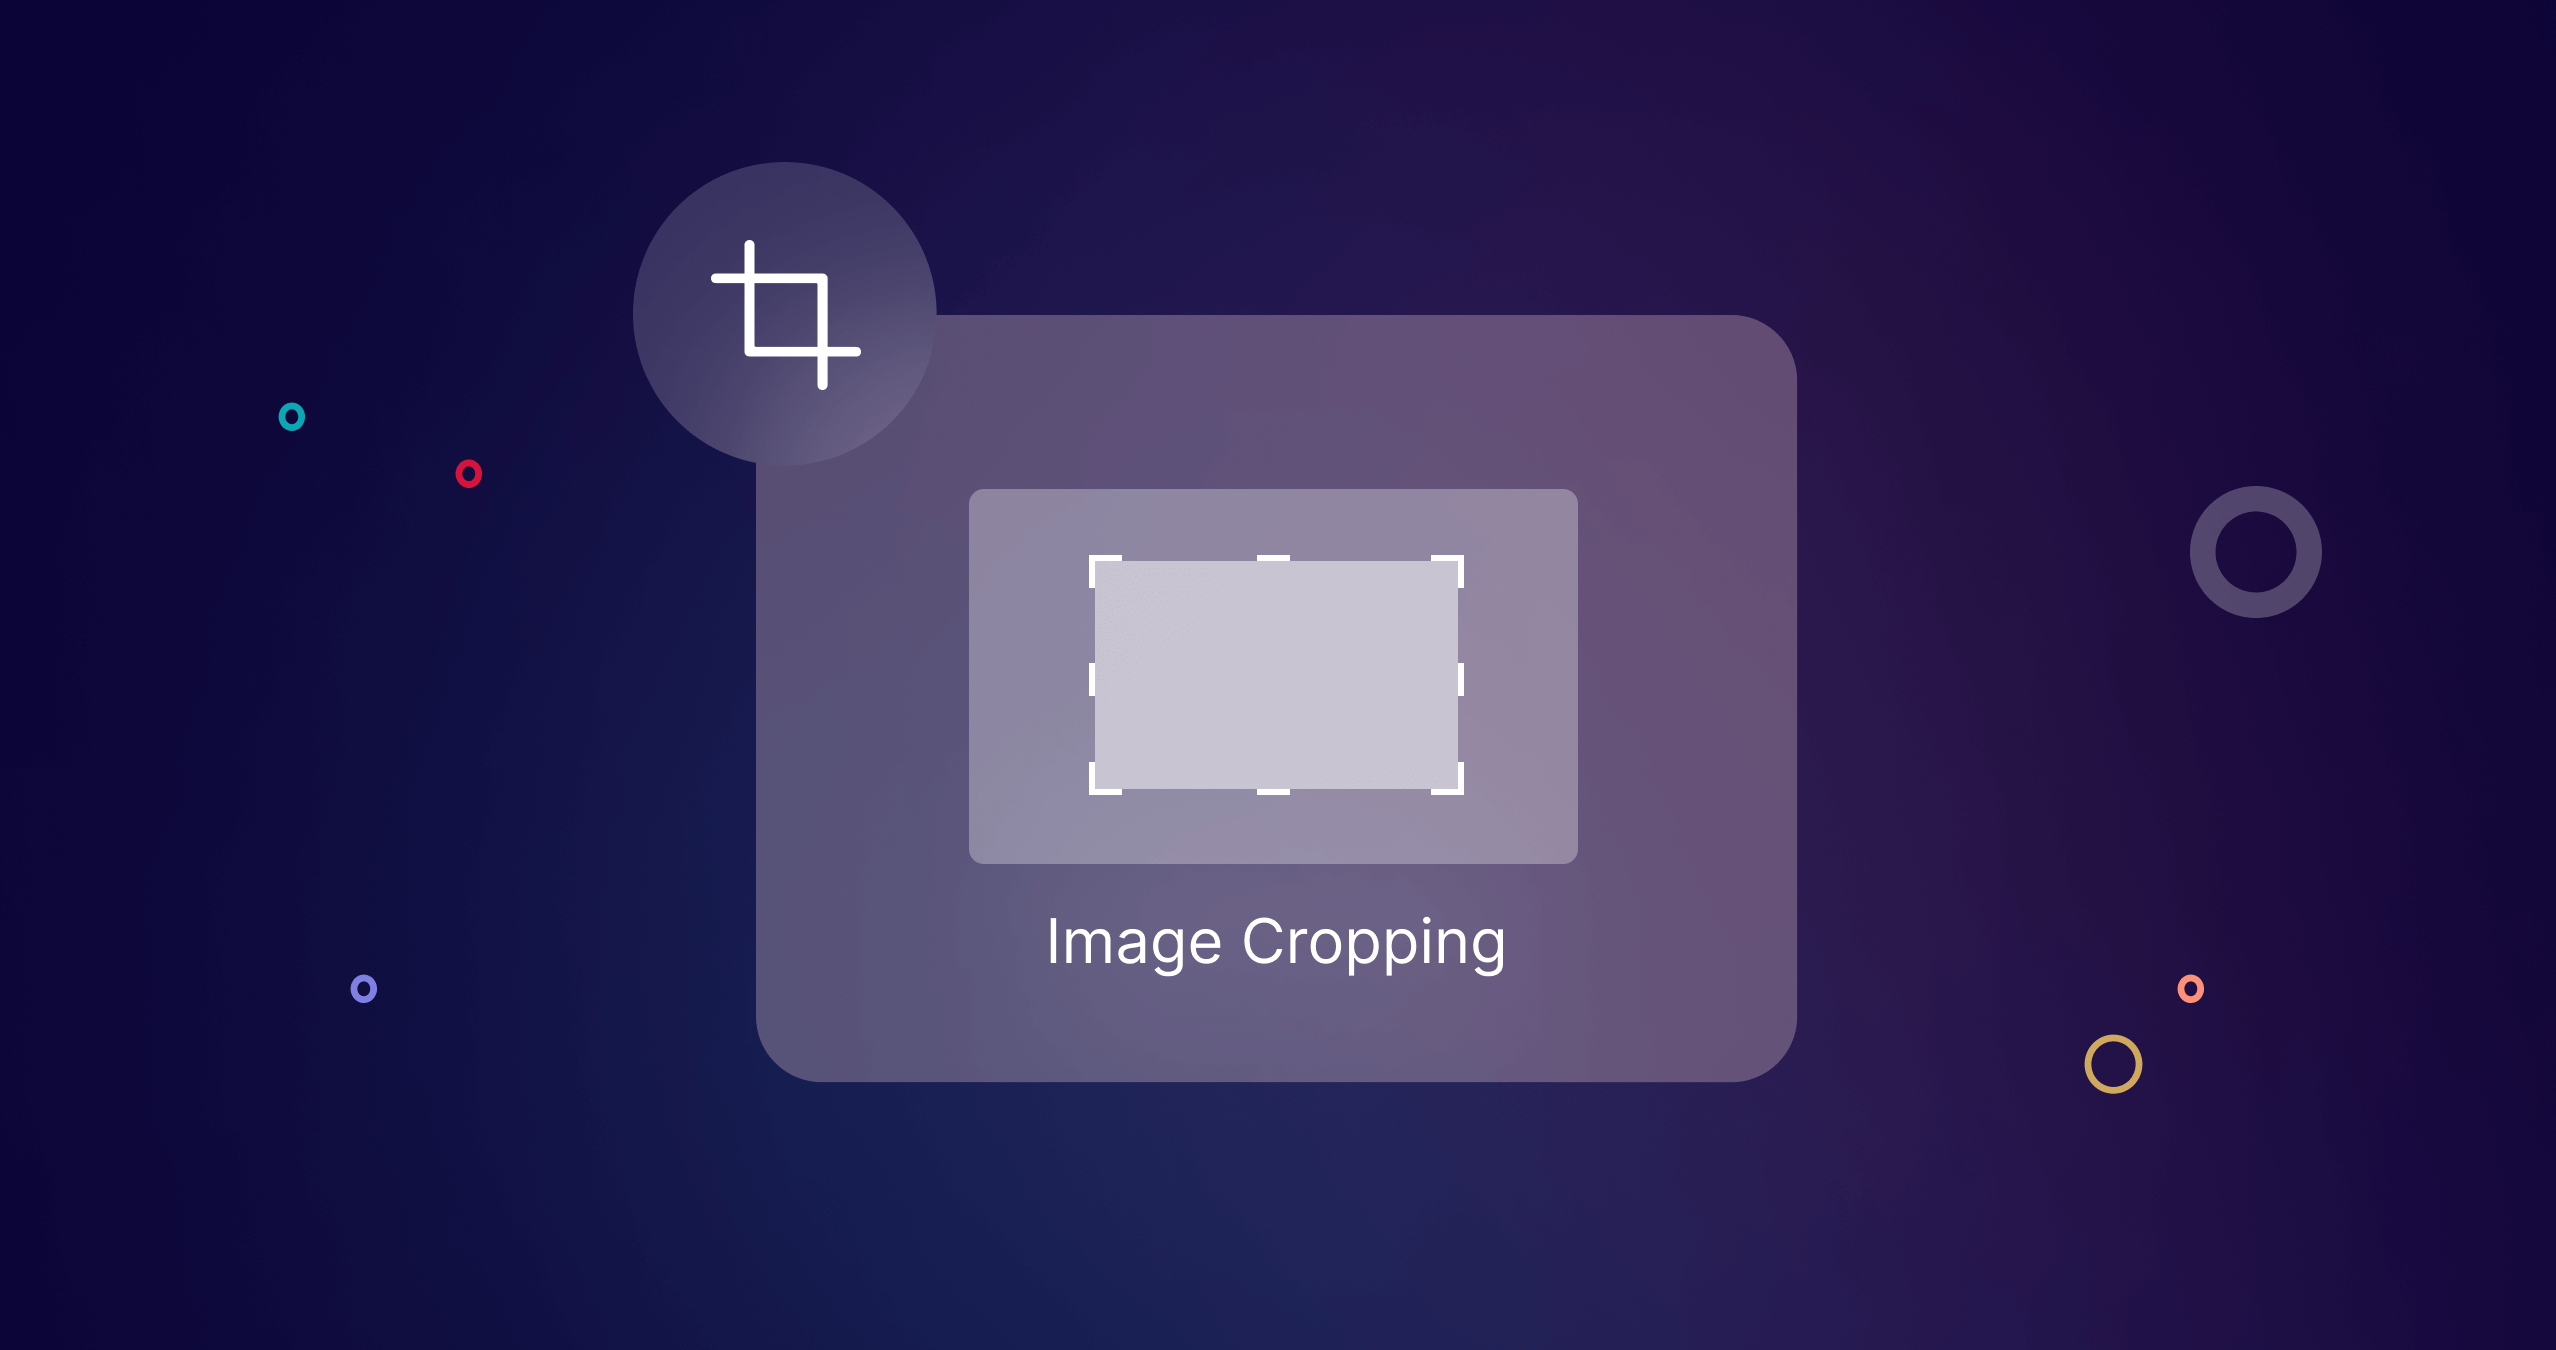 Image editing interface showcasing an image cropping tool